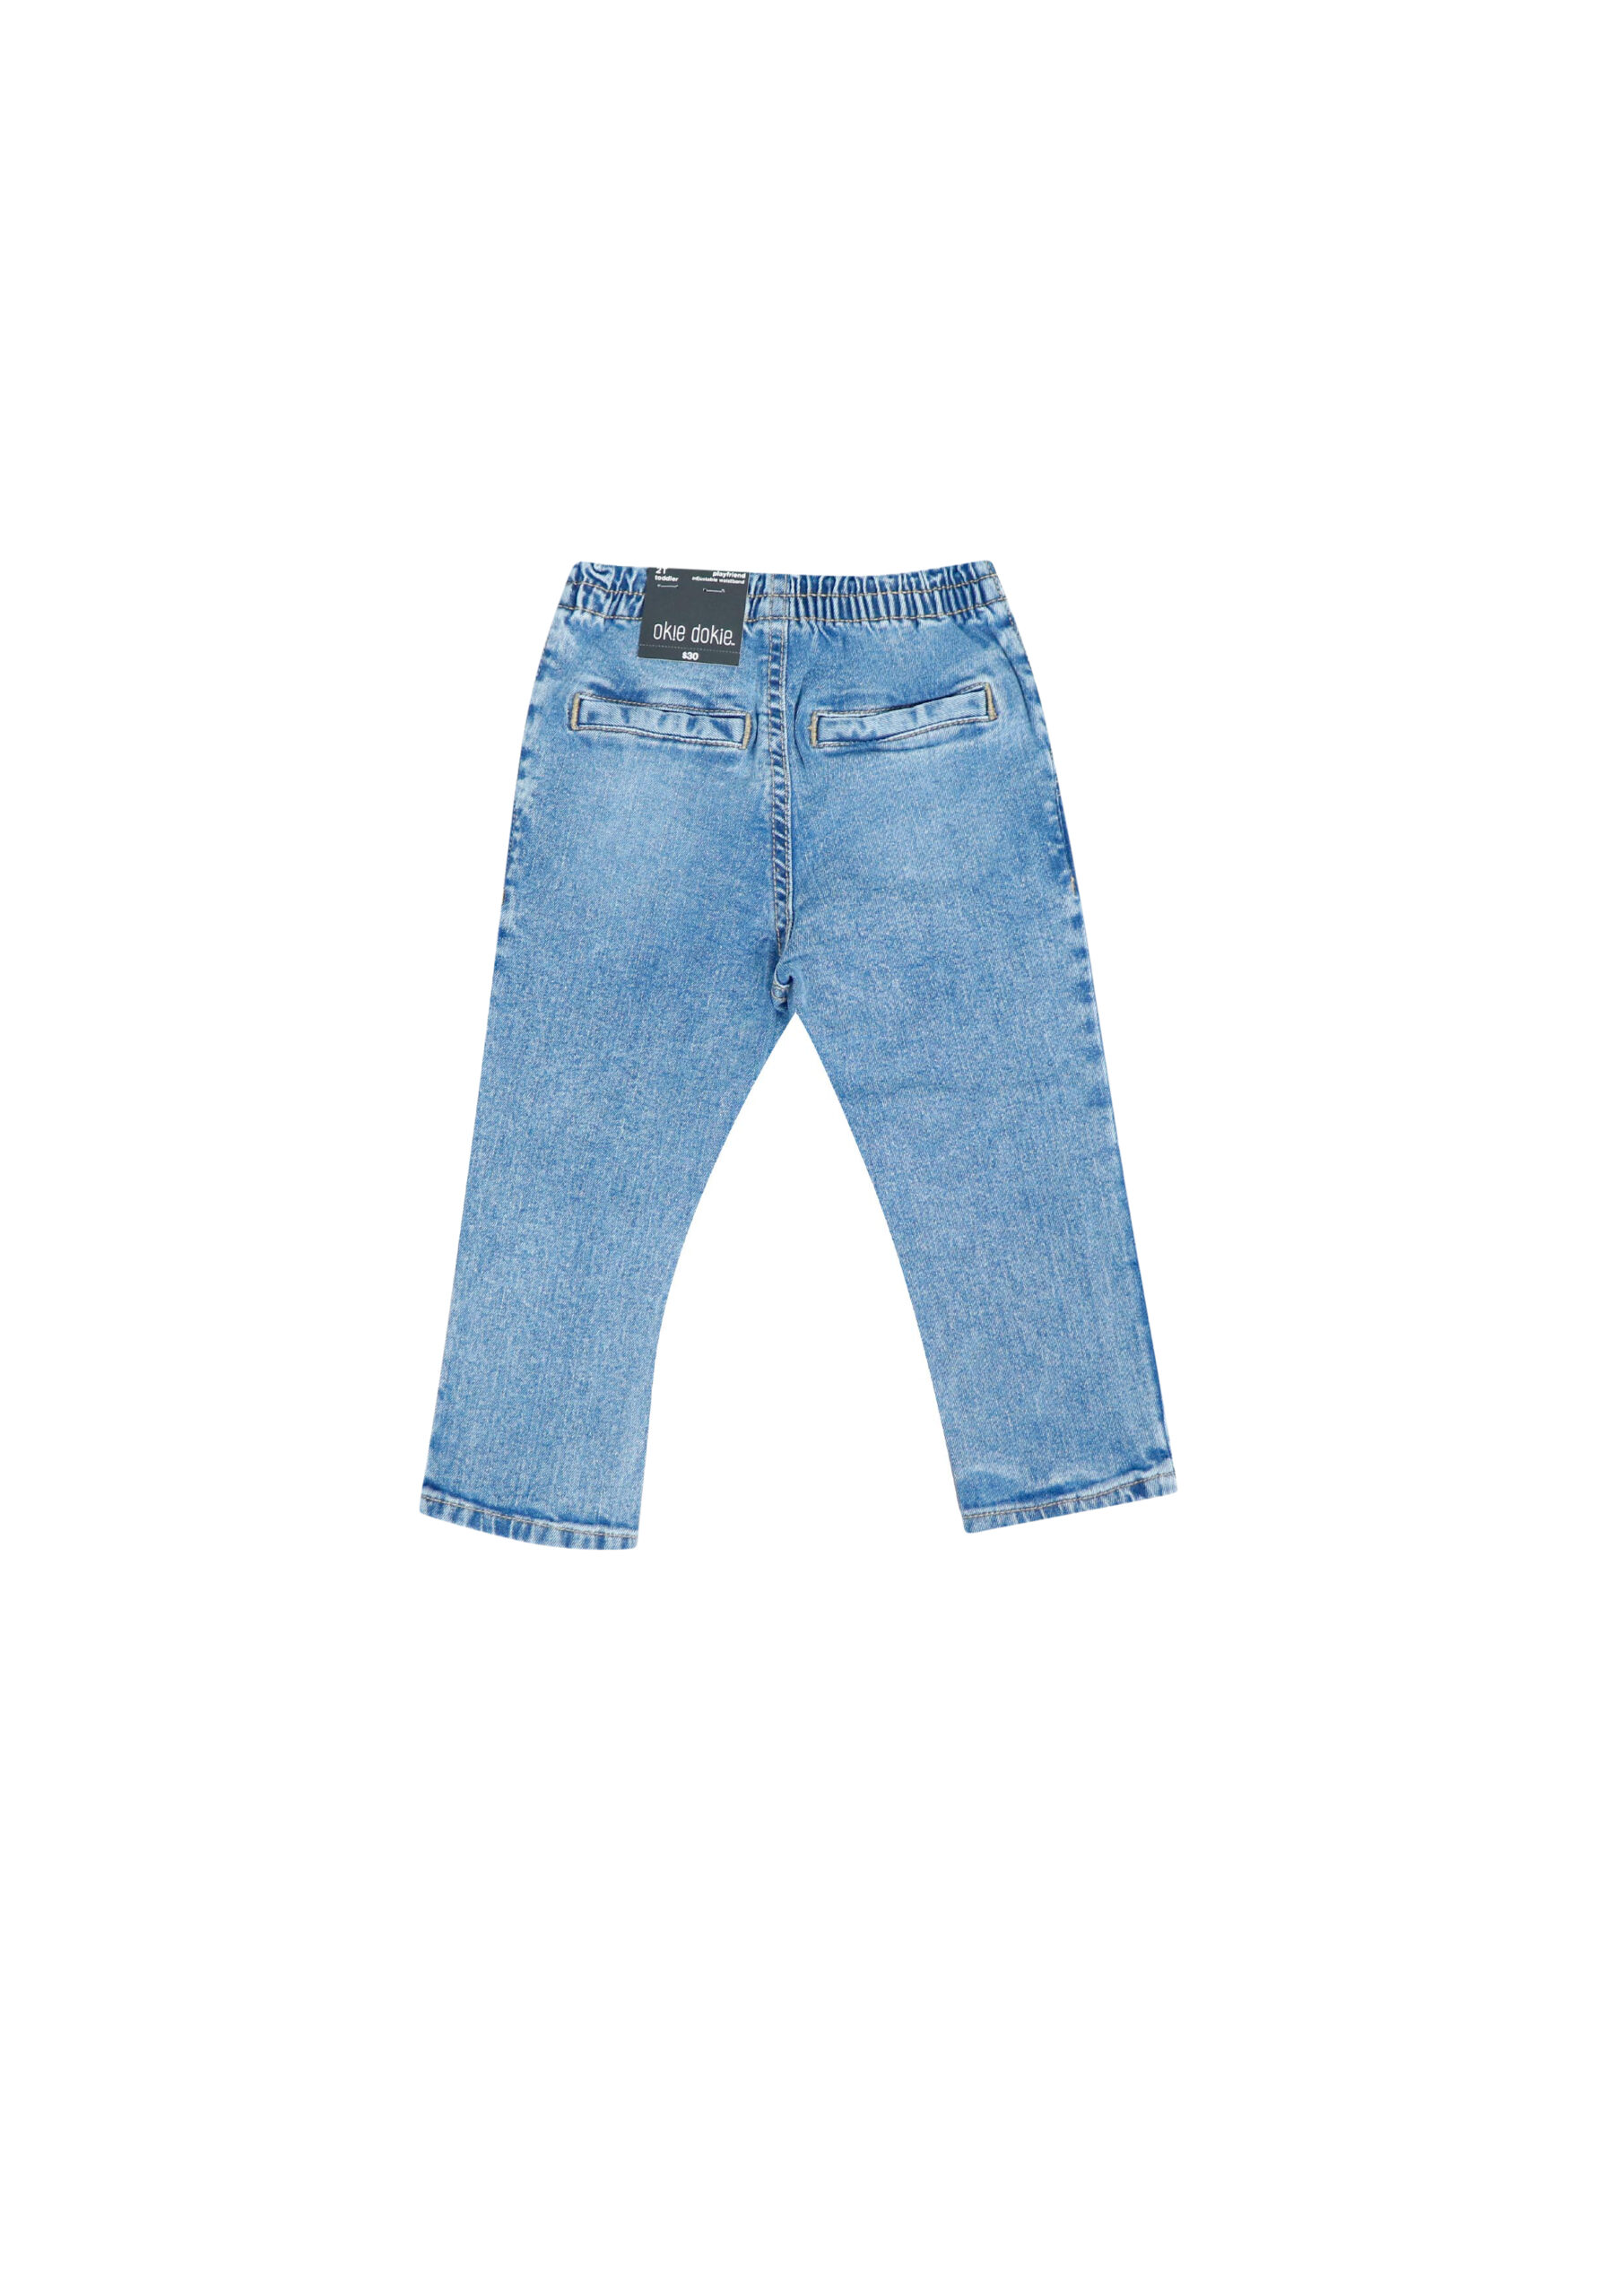 Boy's Pant - Artisan Outfitters Ltd